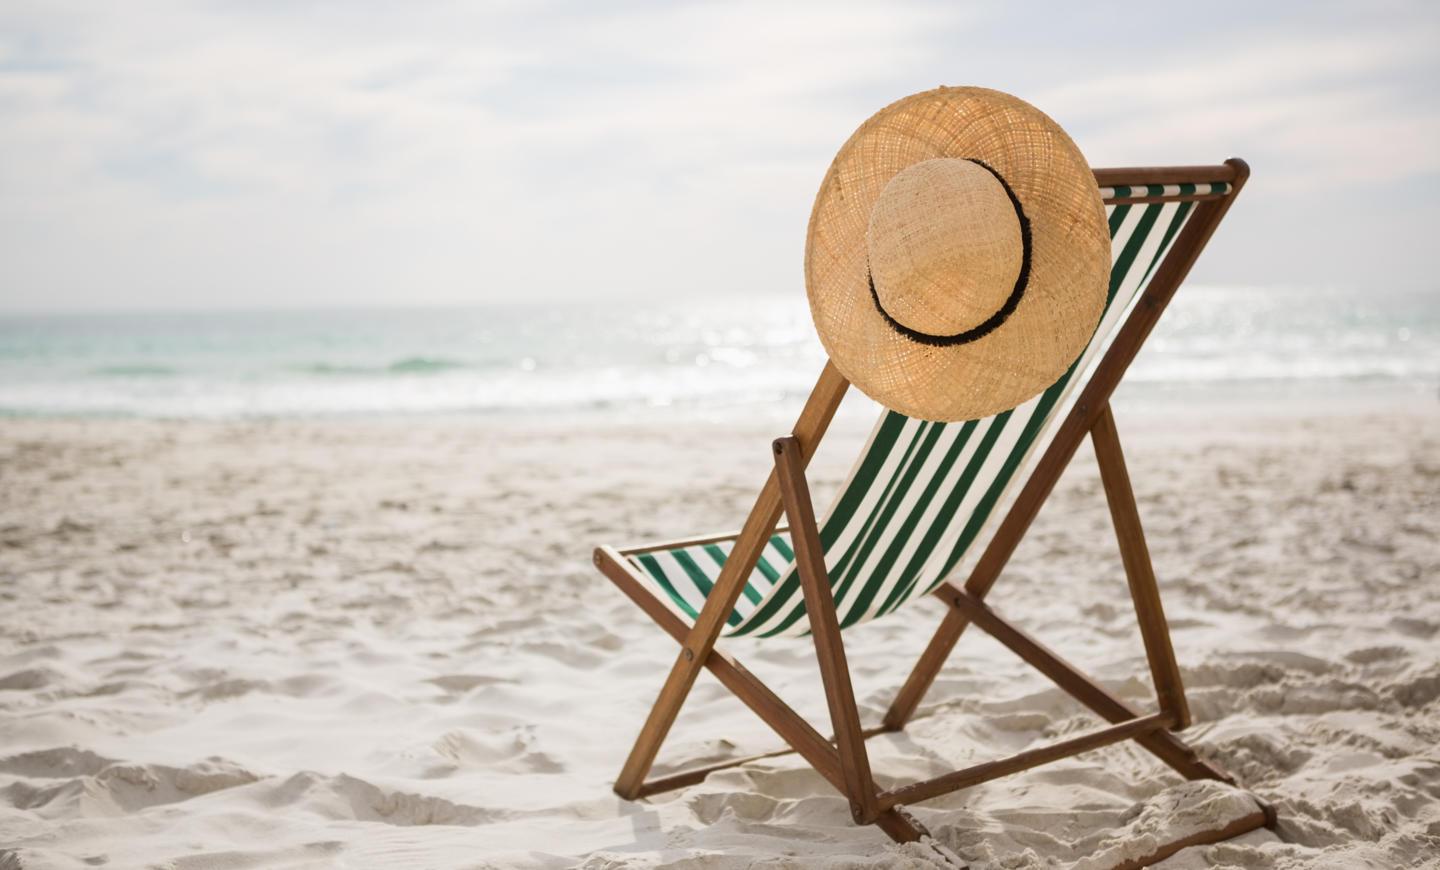 straw-hat-kept-empty-beach-chair.jpg